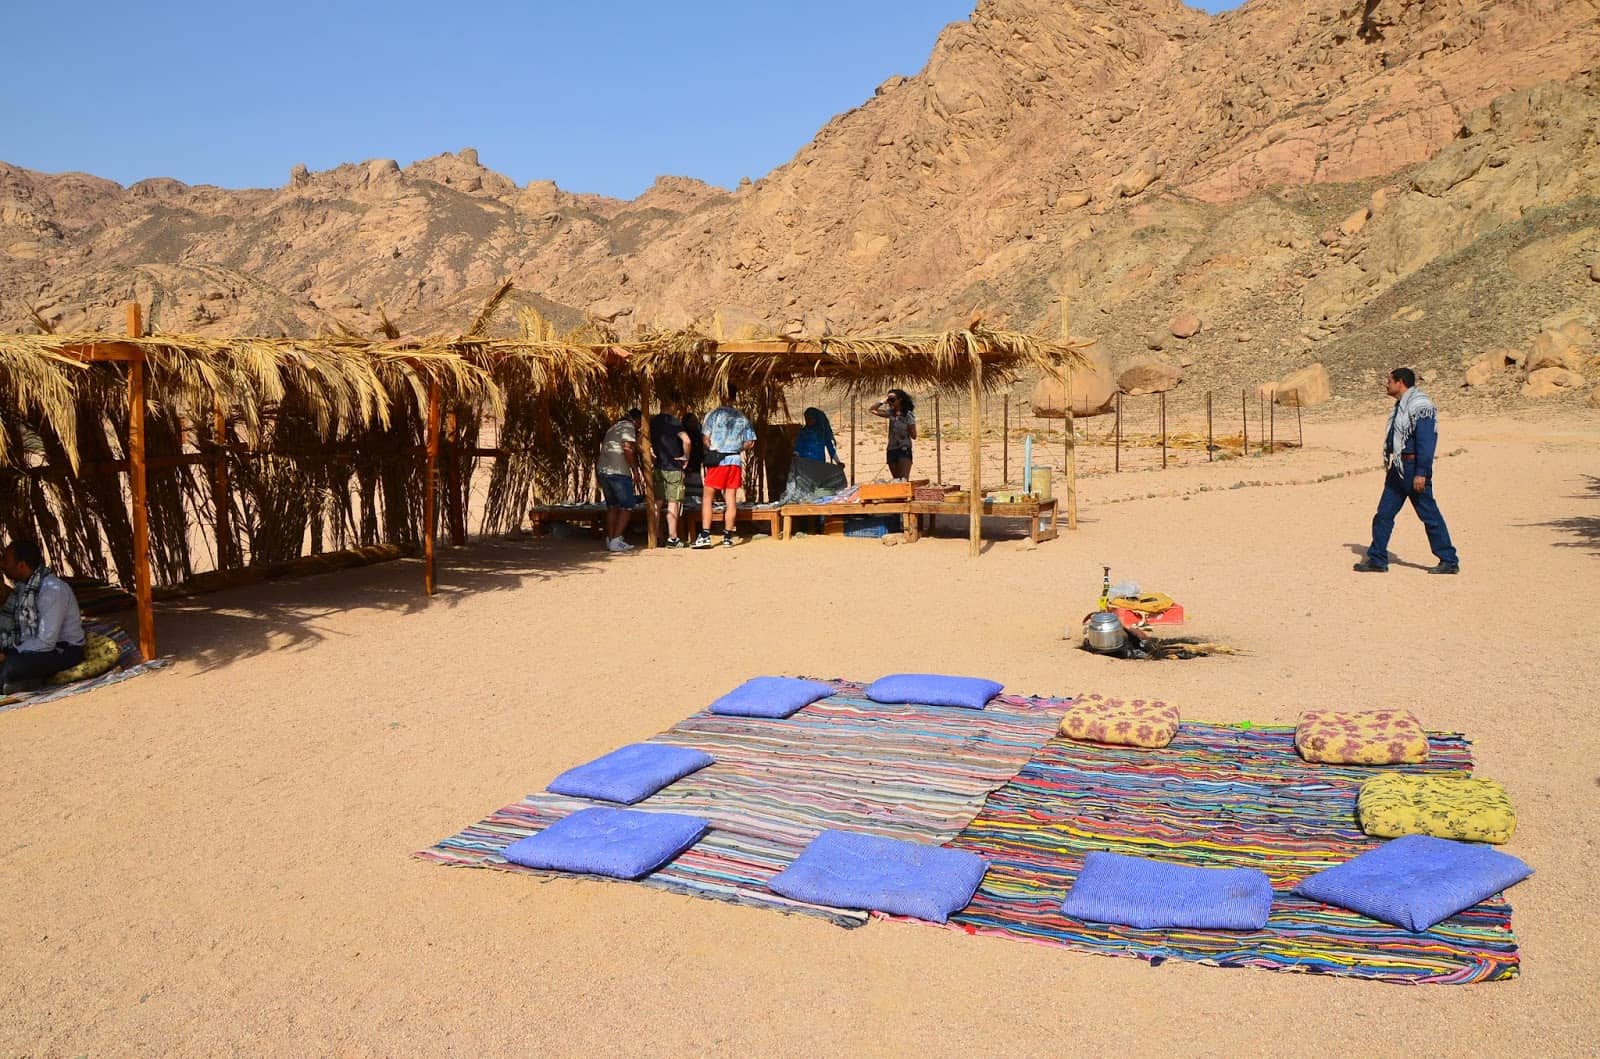 Bedouin camp on the desert safari in Sinai, Egypt